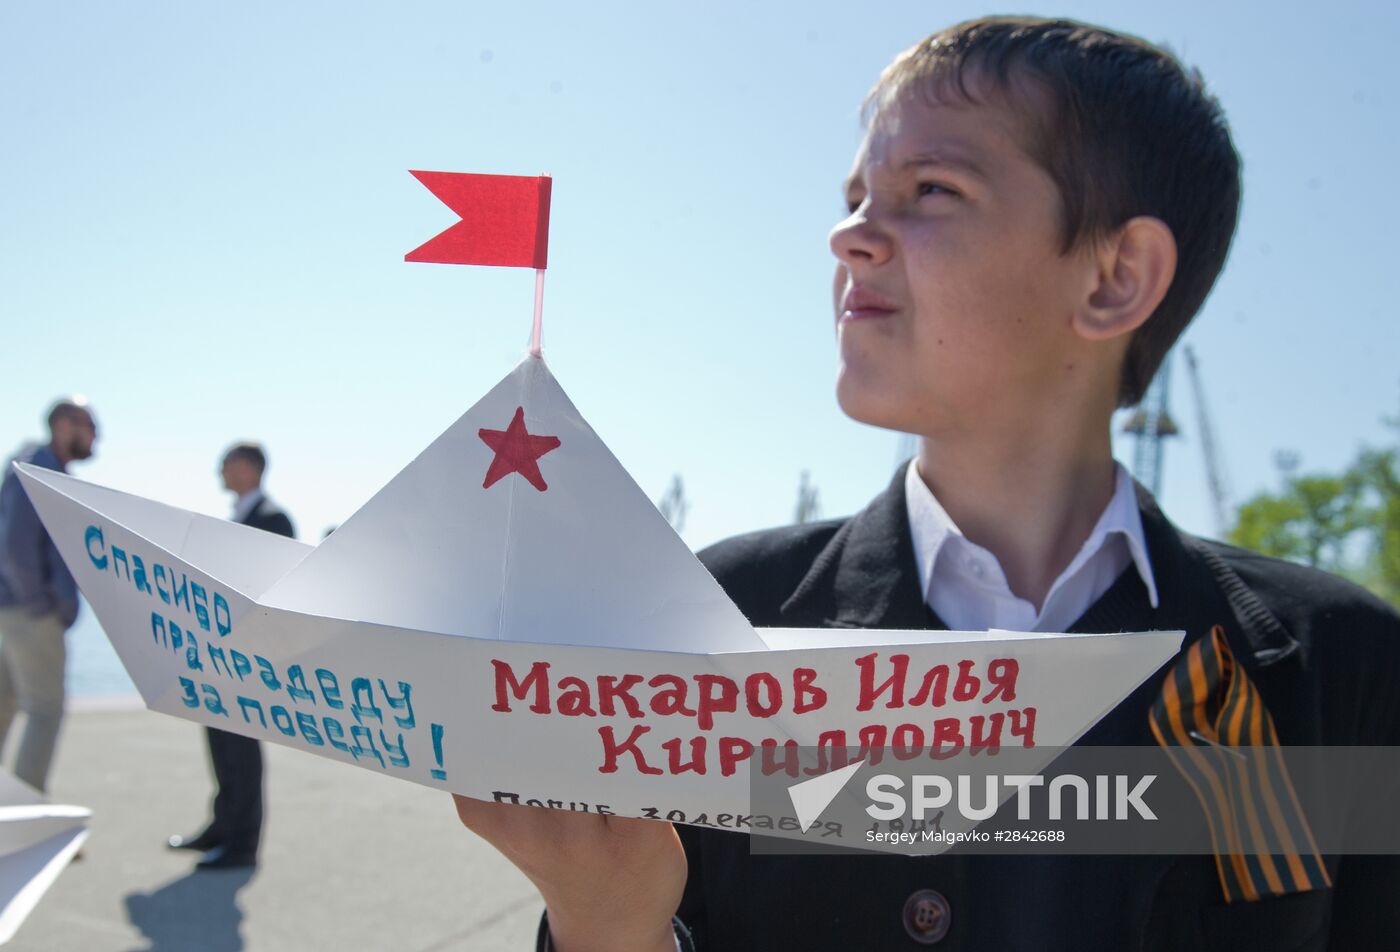 Victory ship event in Crimea